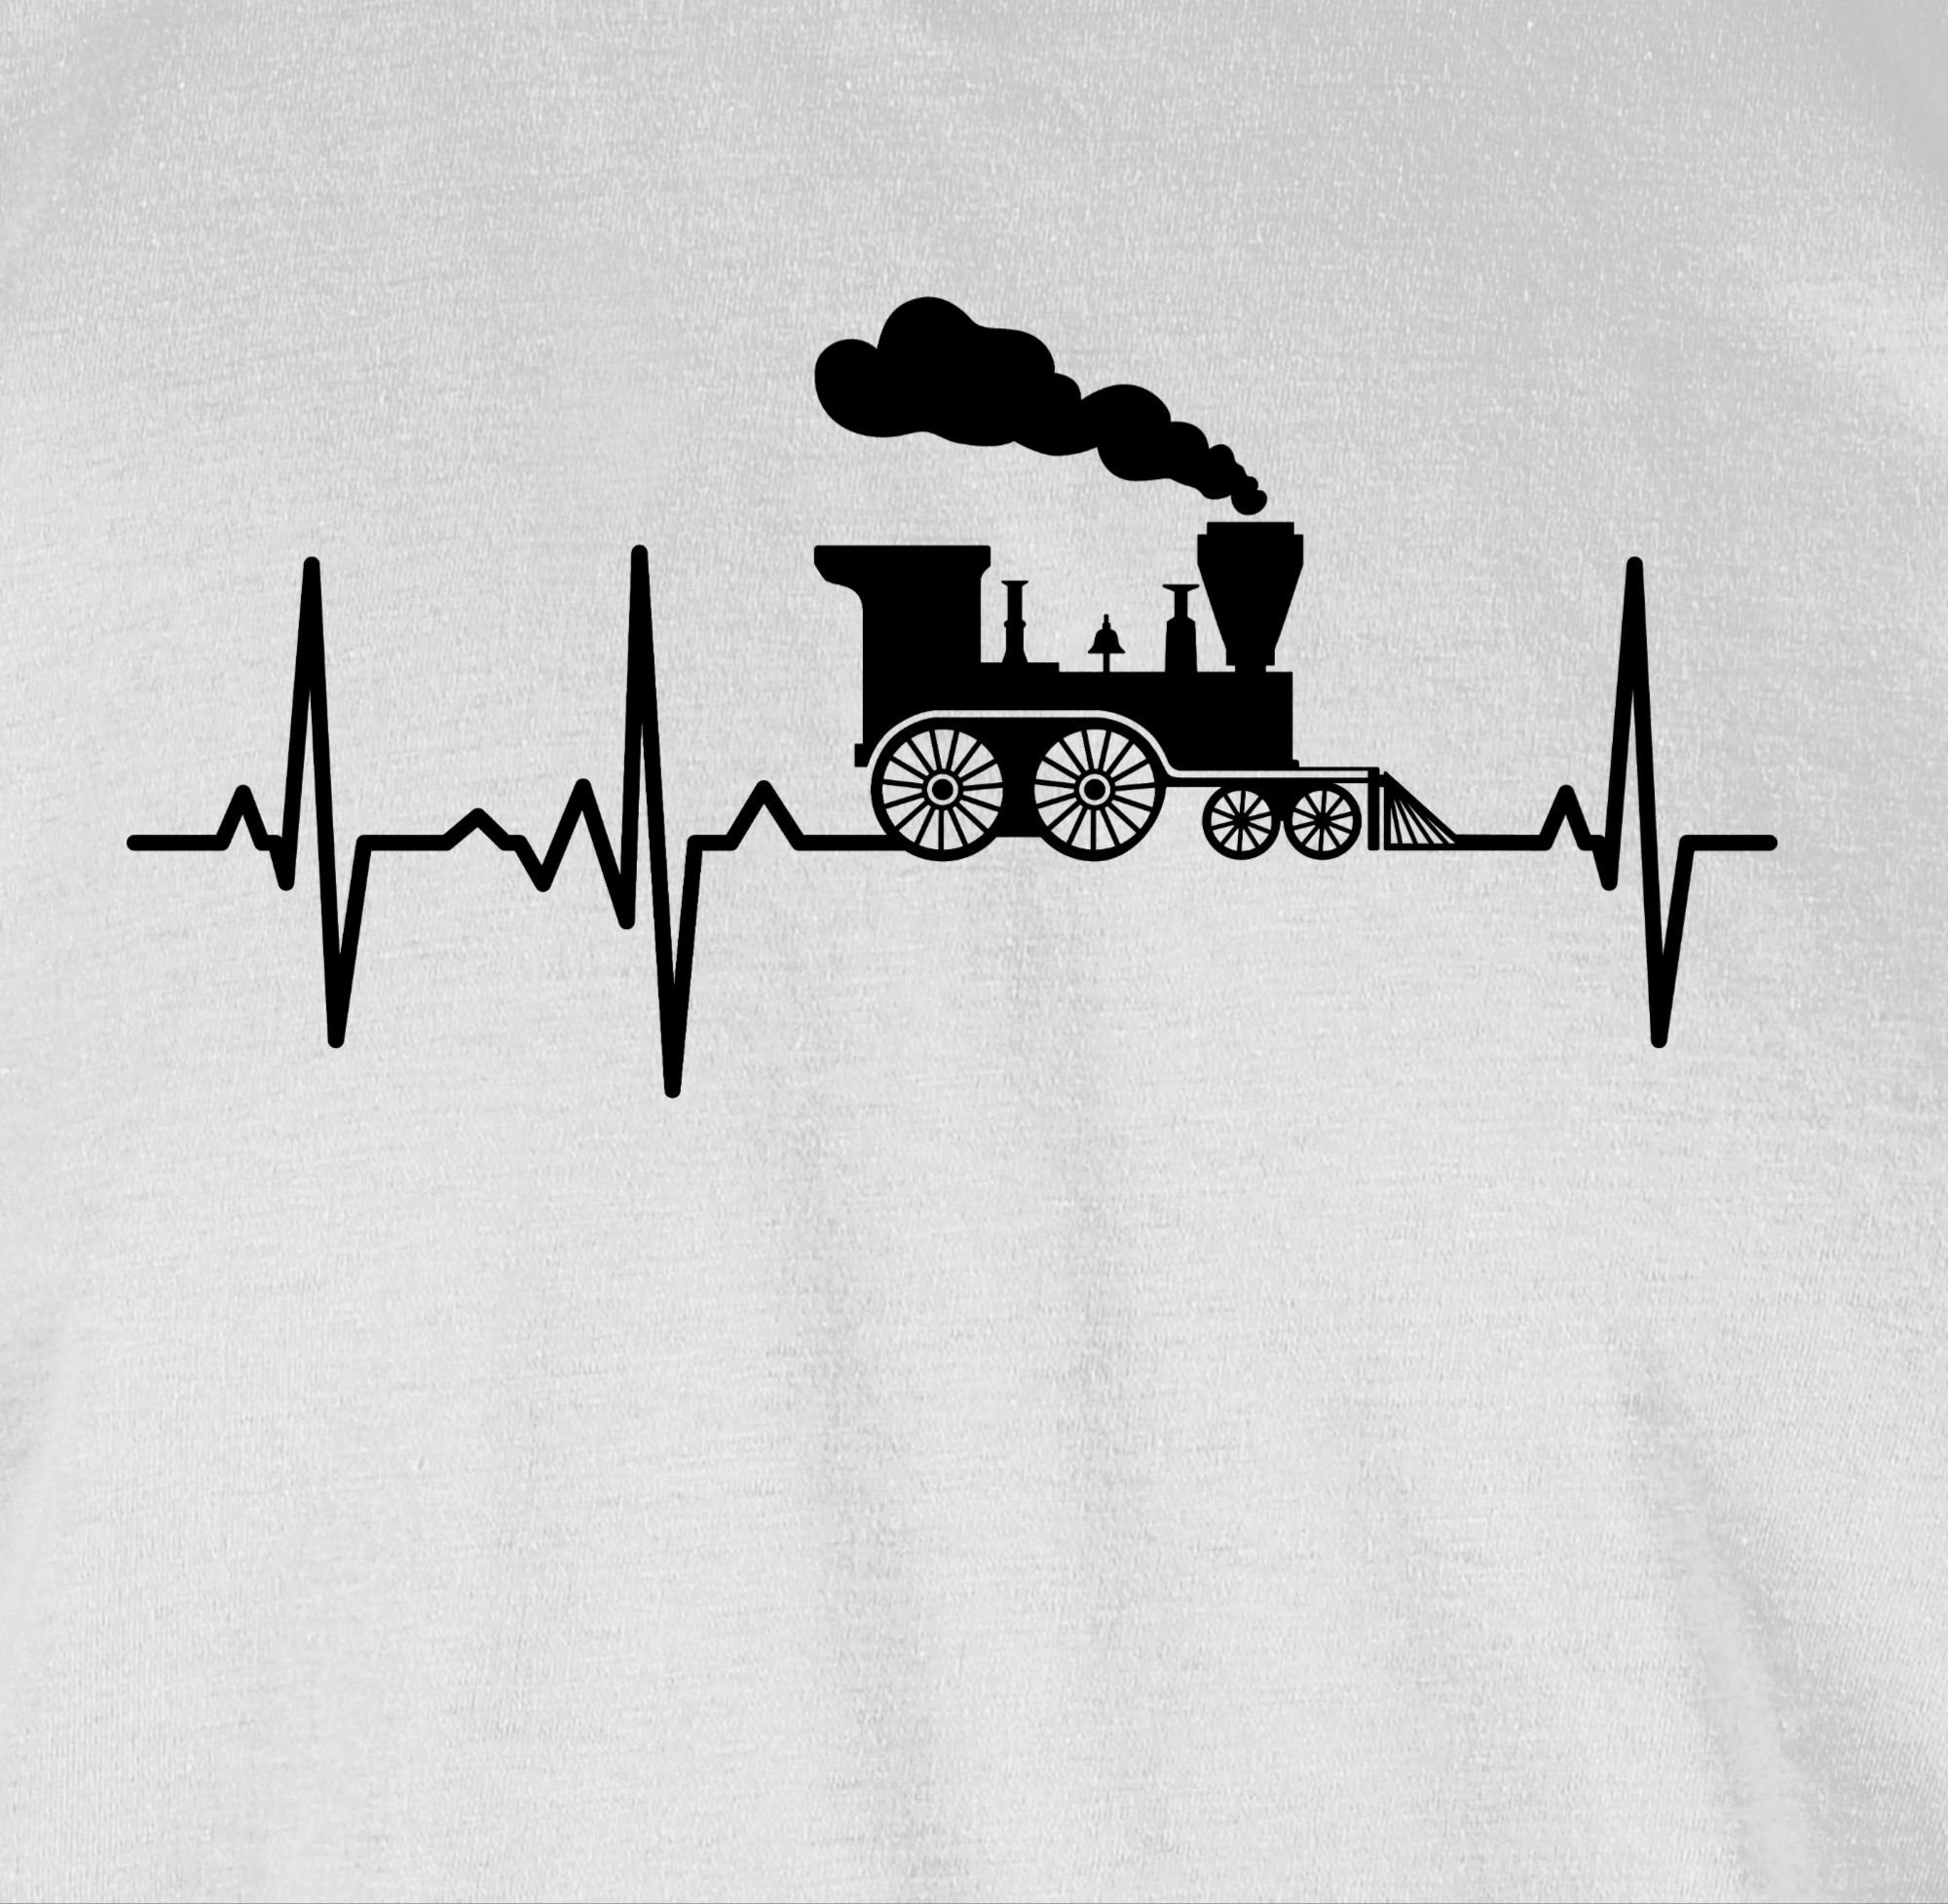 Dampflokomotive T-Shirt Outfit Hobby Herzschlag Eisenbahner Dampflok Geschenk Shirtracer 3 Eisenbahnli Weiß I